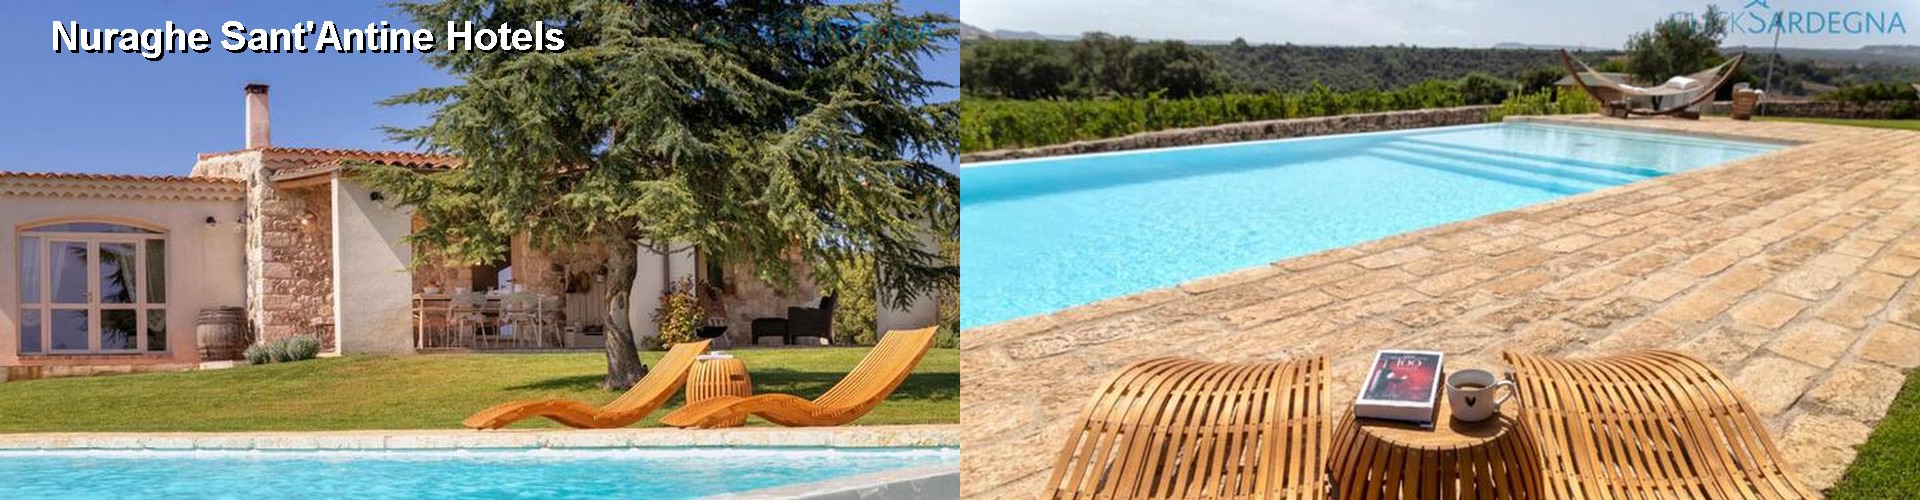 5 Best Hotels near Nuraghe Sant'Antine